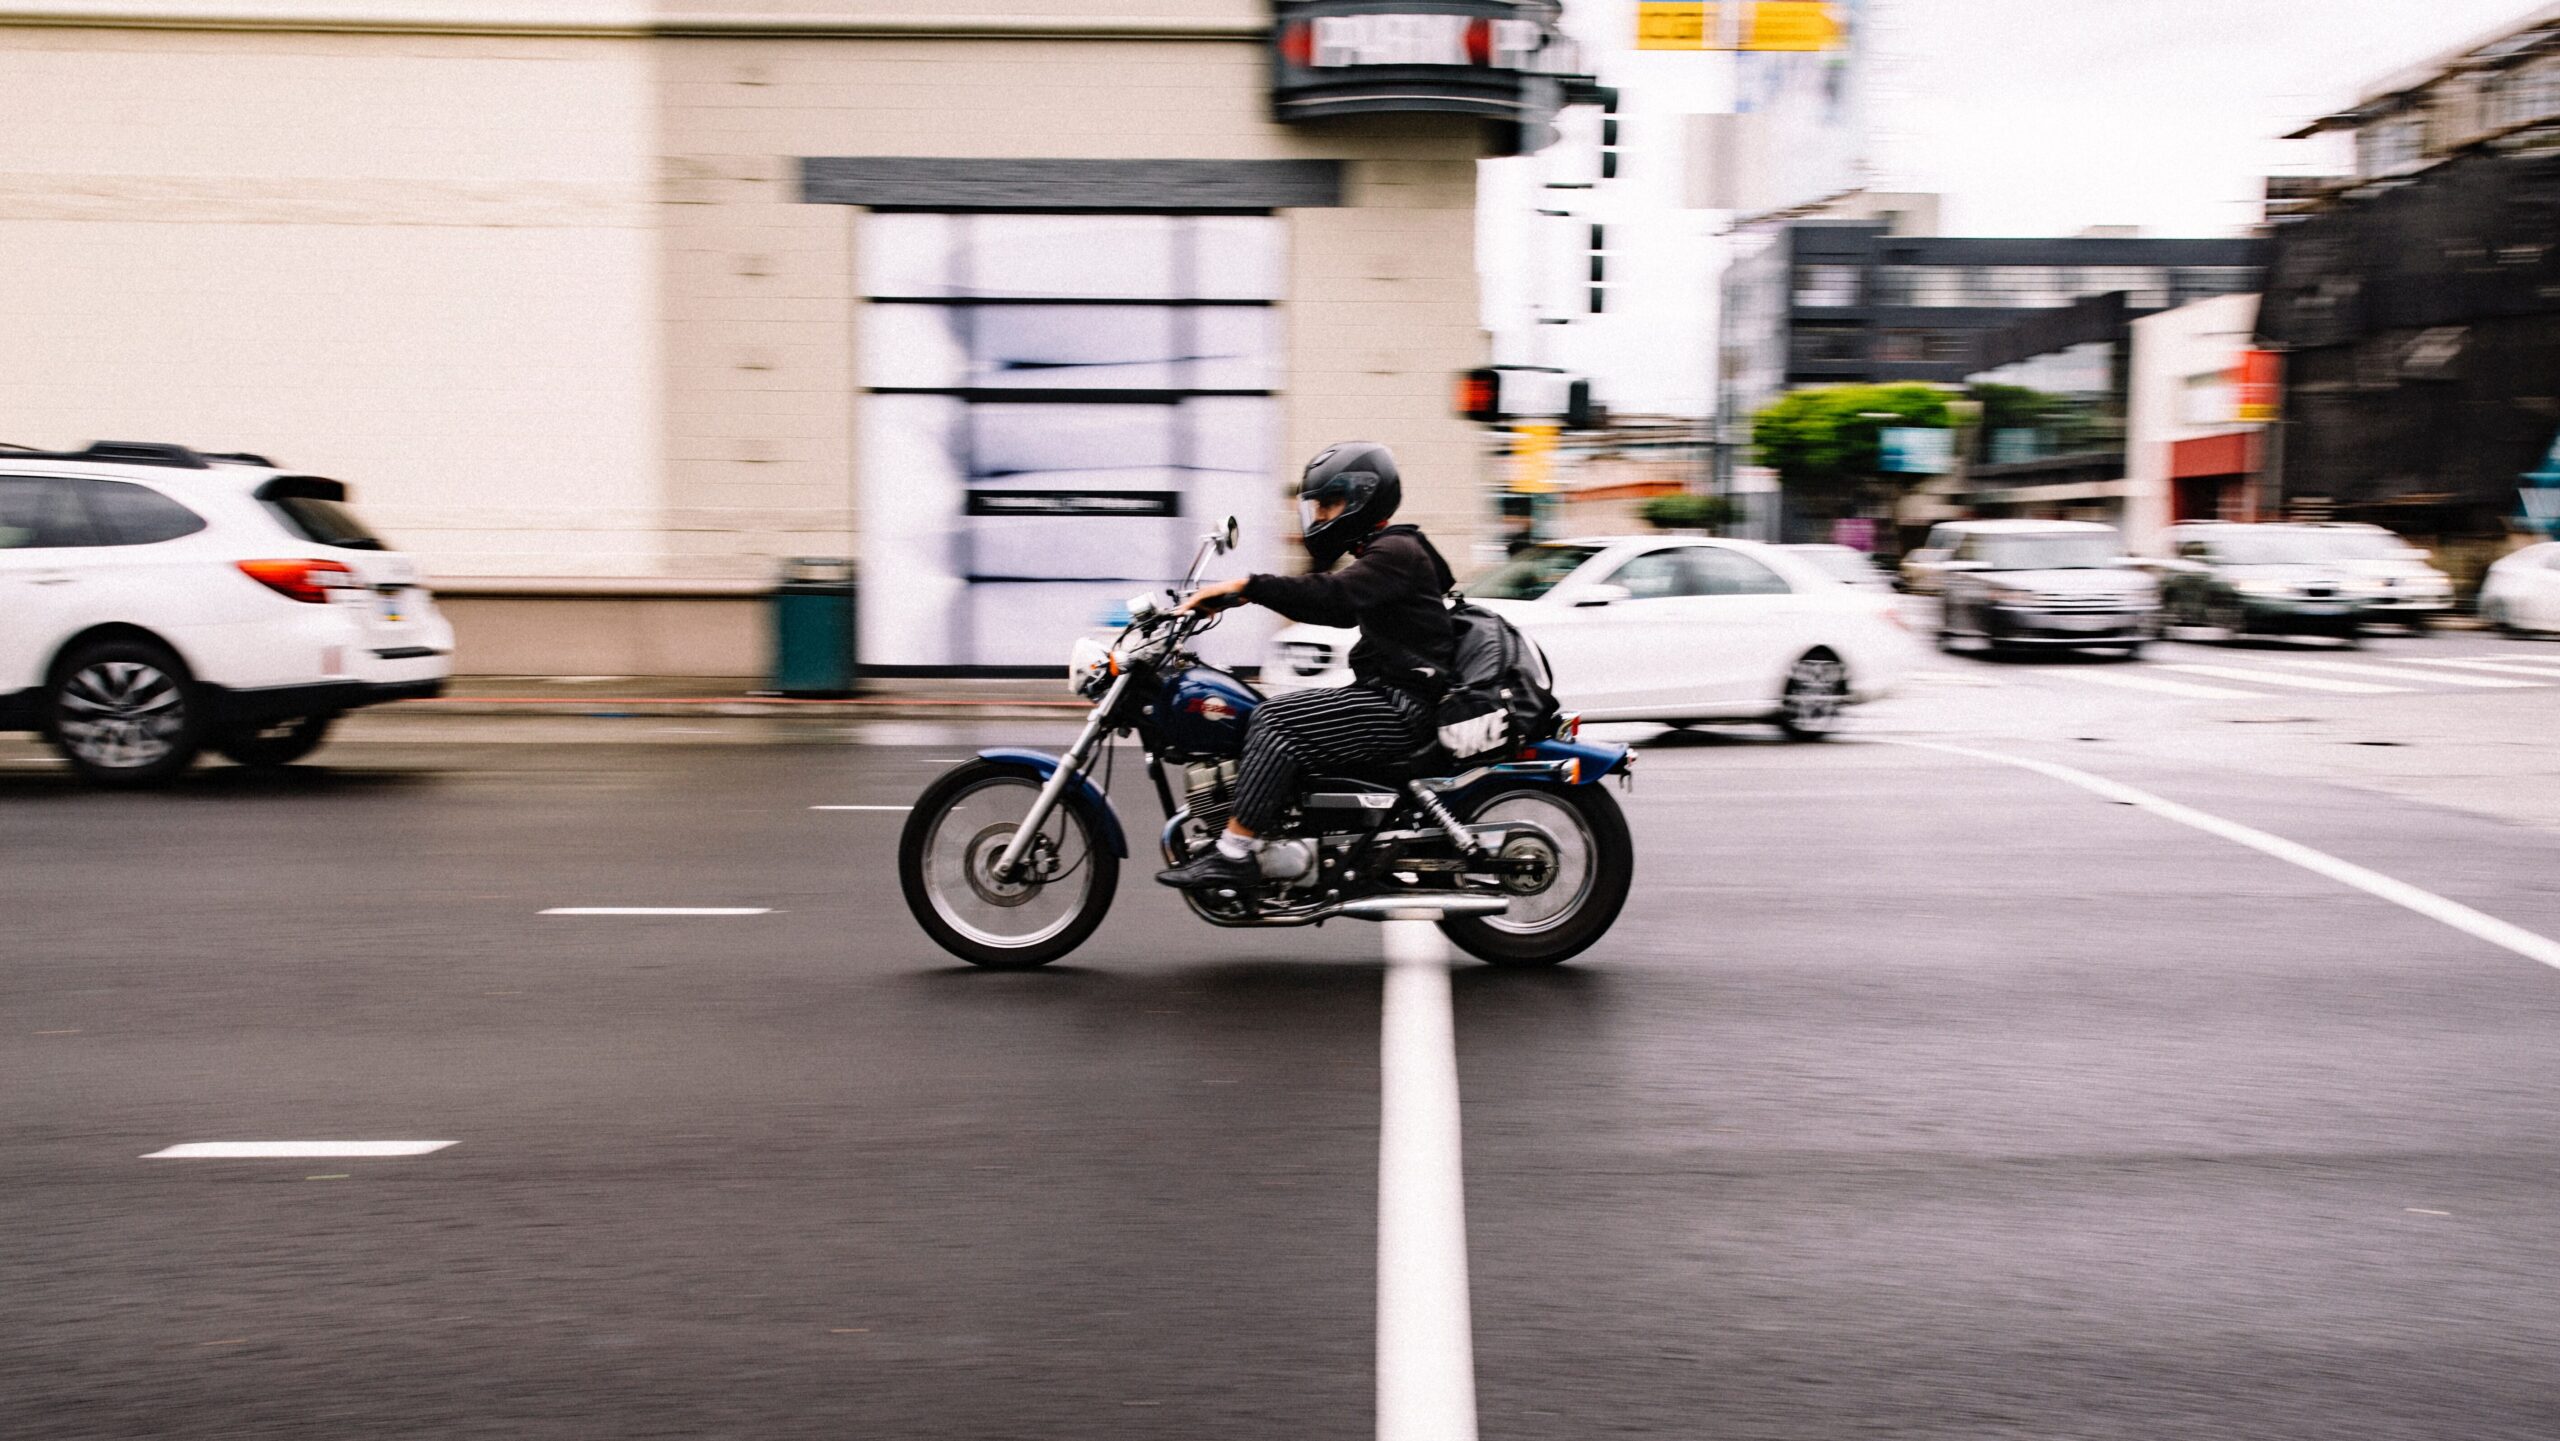 Person riding a motorcycle through a city street